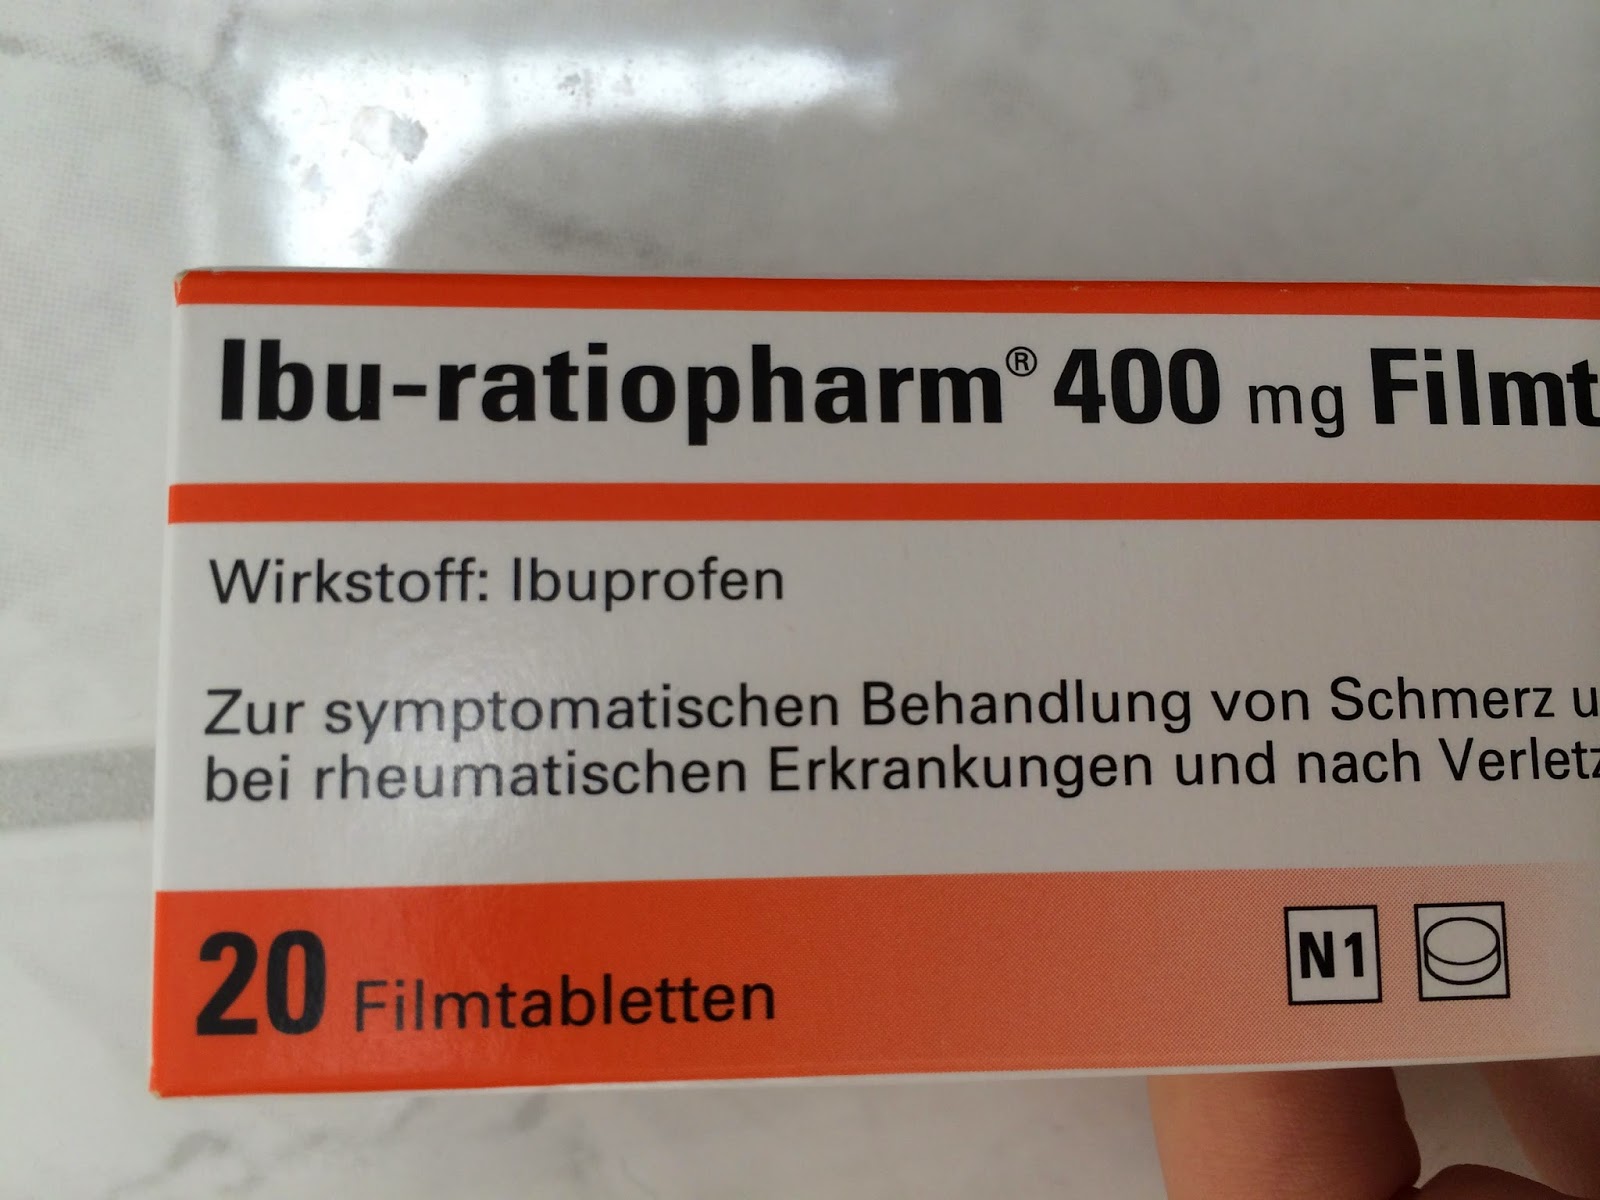 Nine and nine German Apothek cold and flu